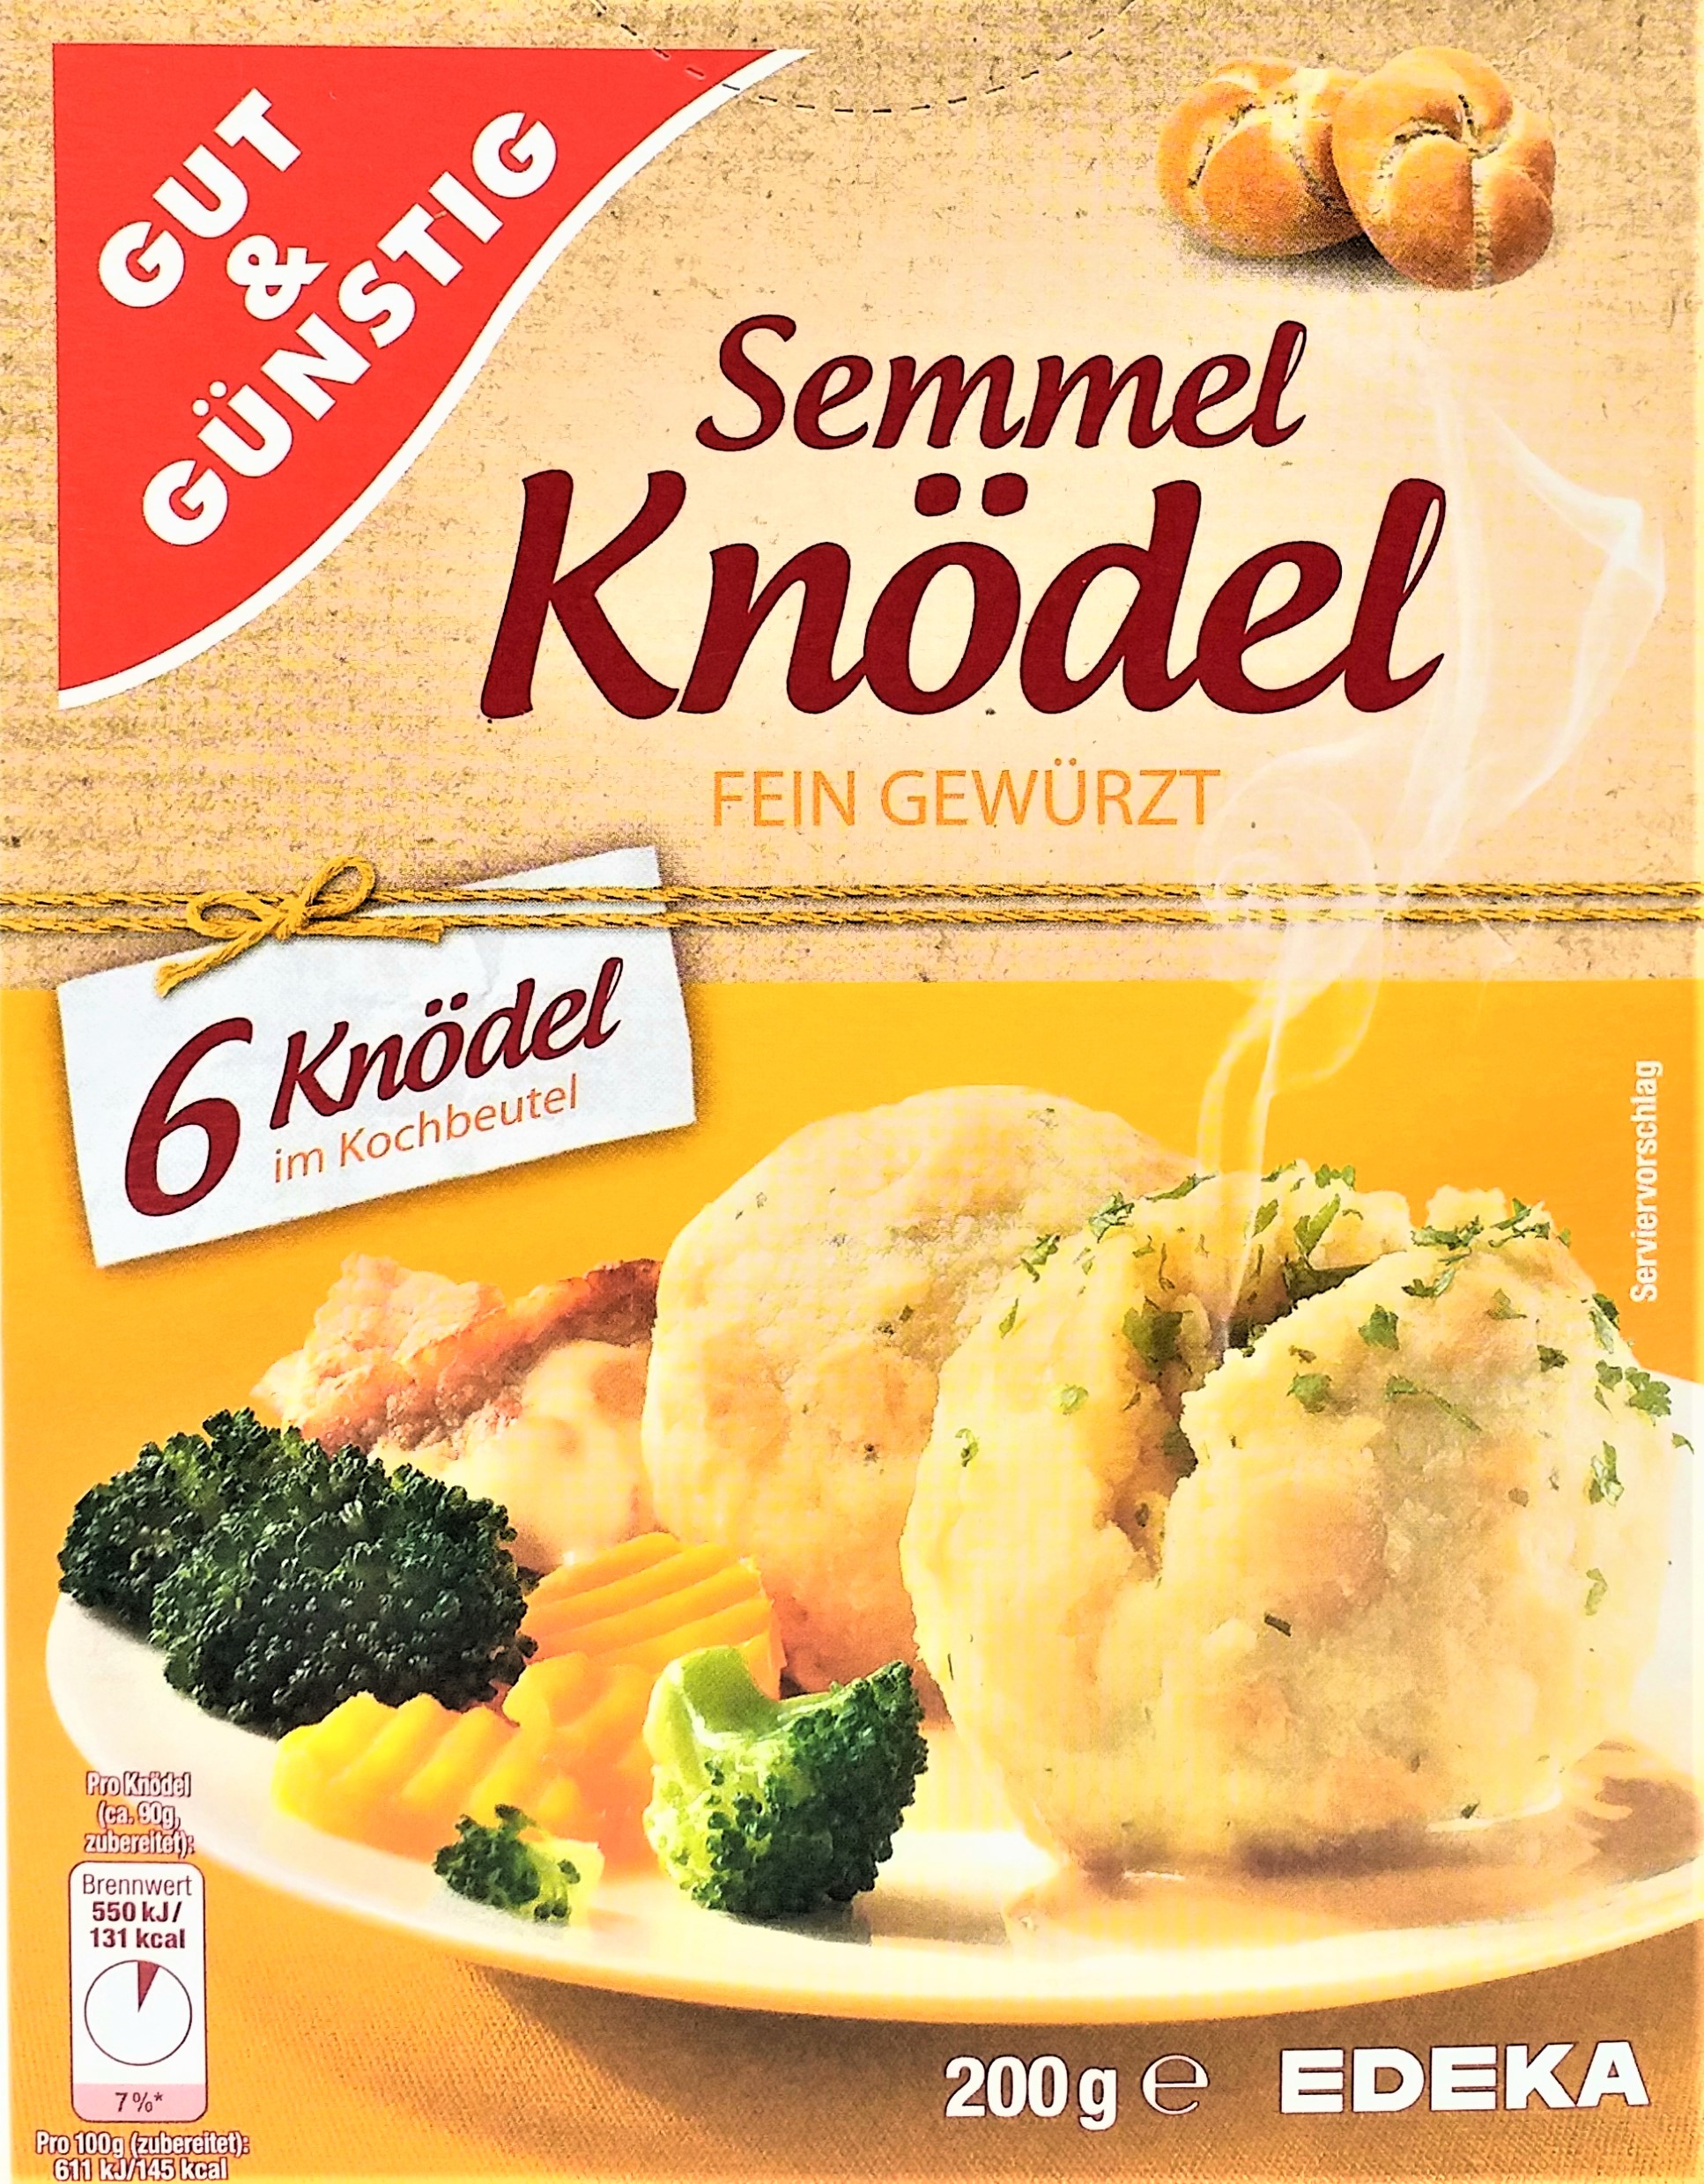 G&G Semmel-Knödel 6 im Kochbeutel 200g